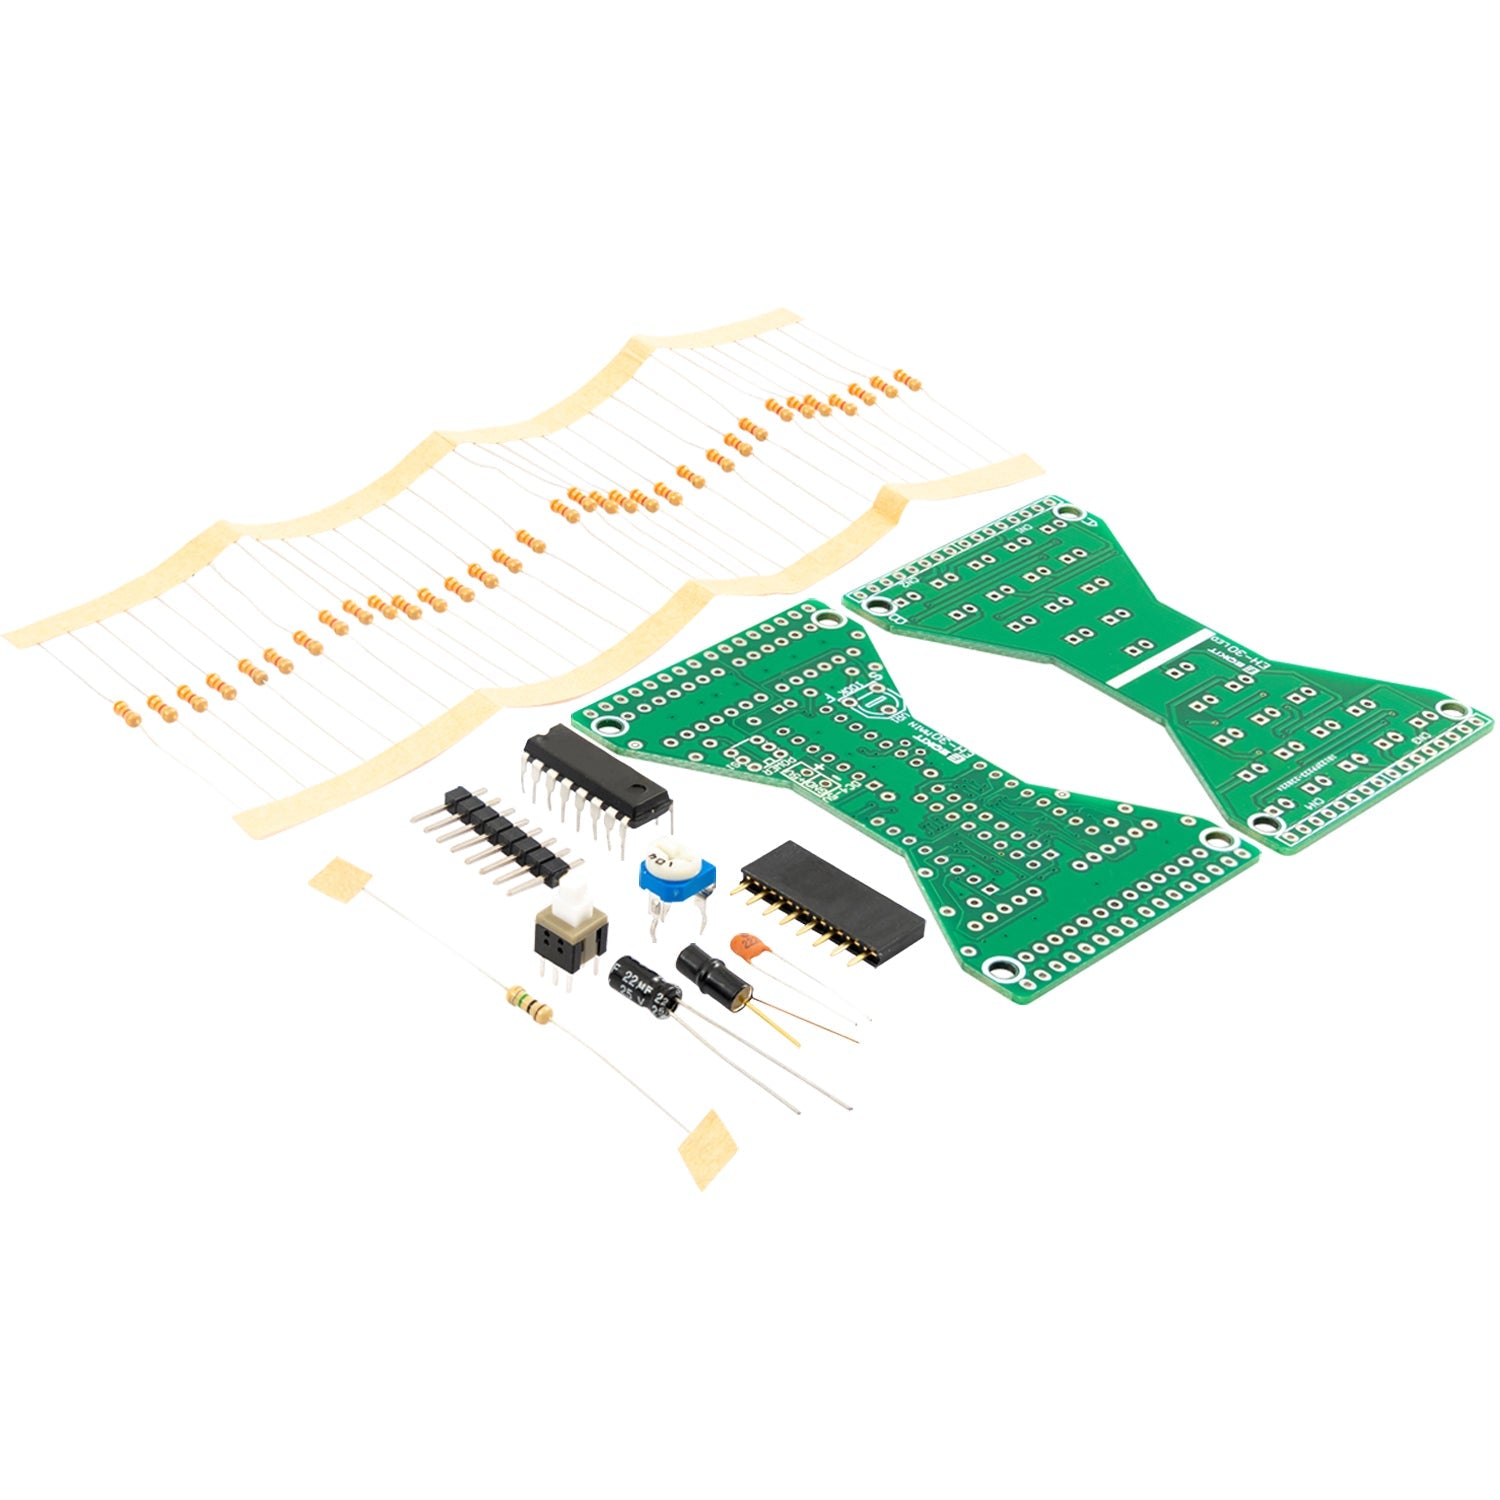 Bausatz Sanduhr: Elektronik Löten & Modellbau Set | DIY Arduino Lötstation | LED Uhr Bausatz | Roboter Bausatz | Einzigartiges Sanduhren Set - AZ-Delivery